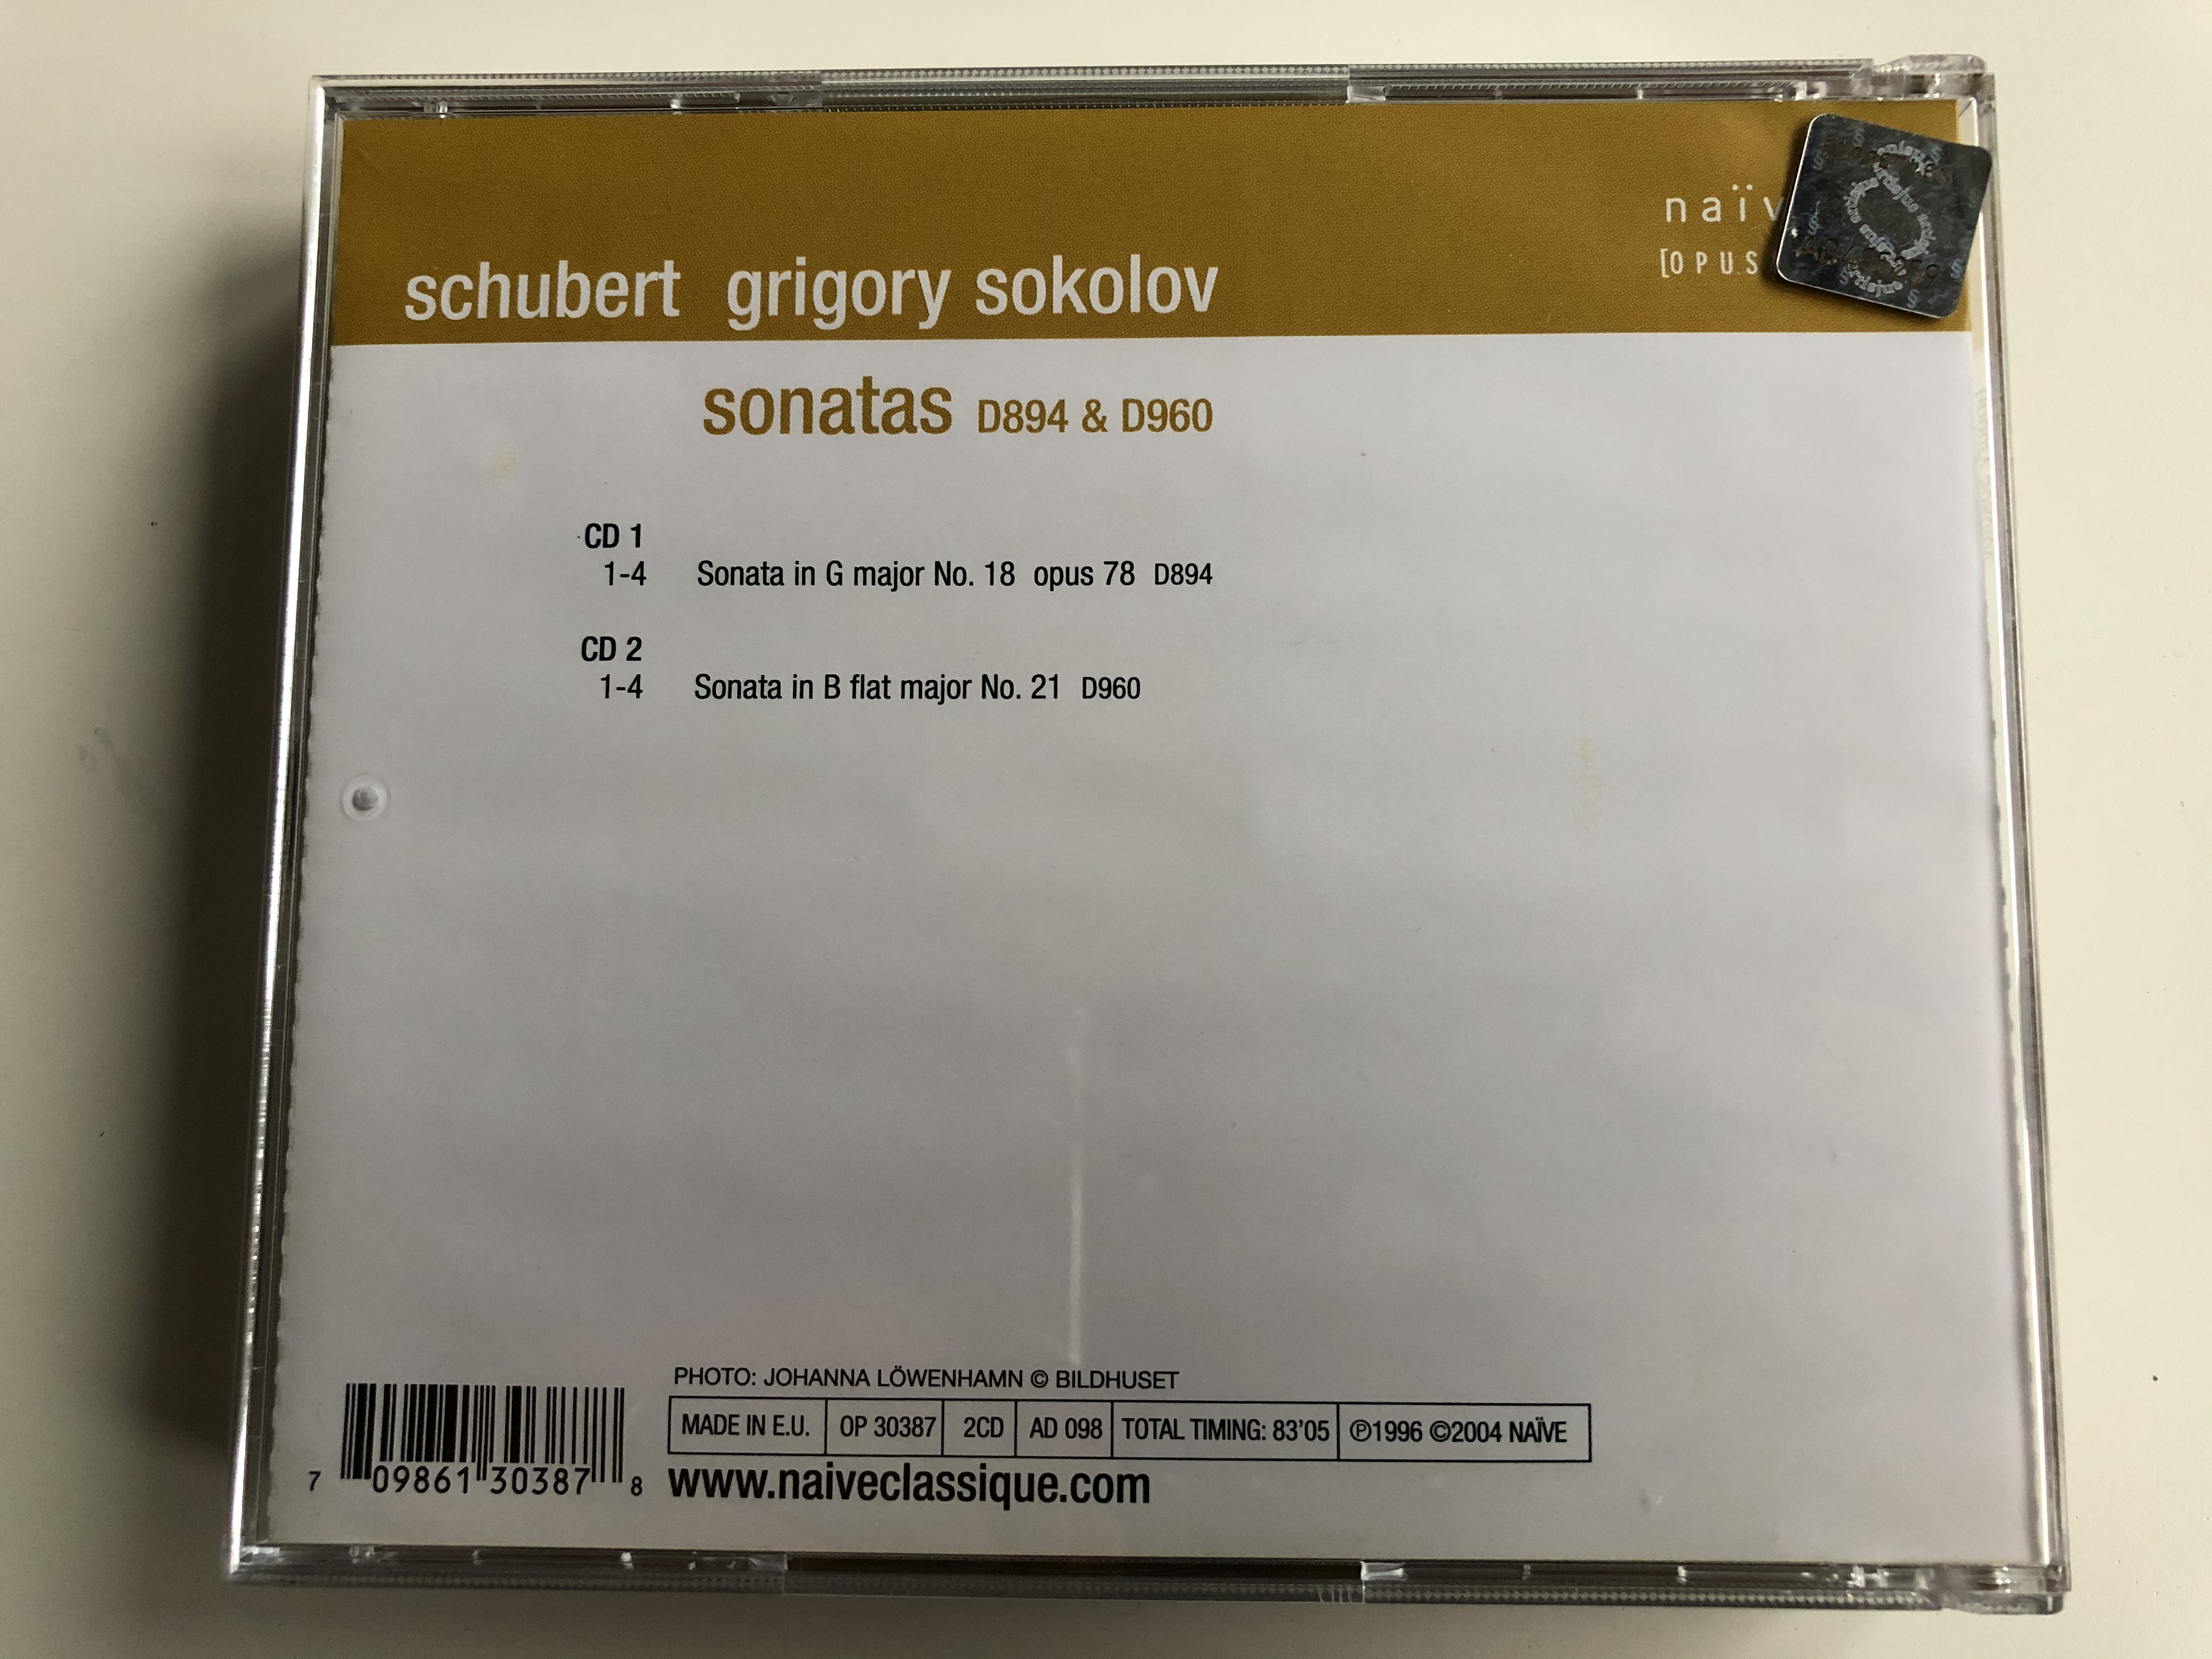 schubert-grigory-sokolov-sonatas-d-894-960-halsinki-1992-opus-111-2x-audio-cd-2004-op-30387-2-.jpg